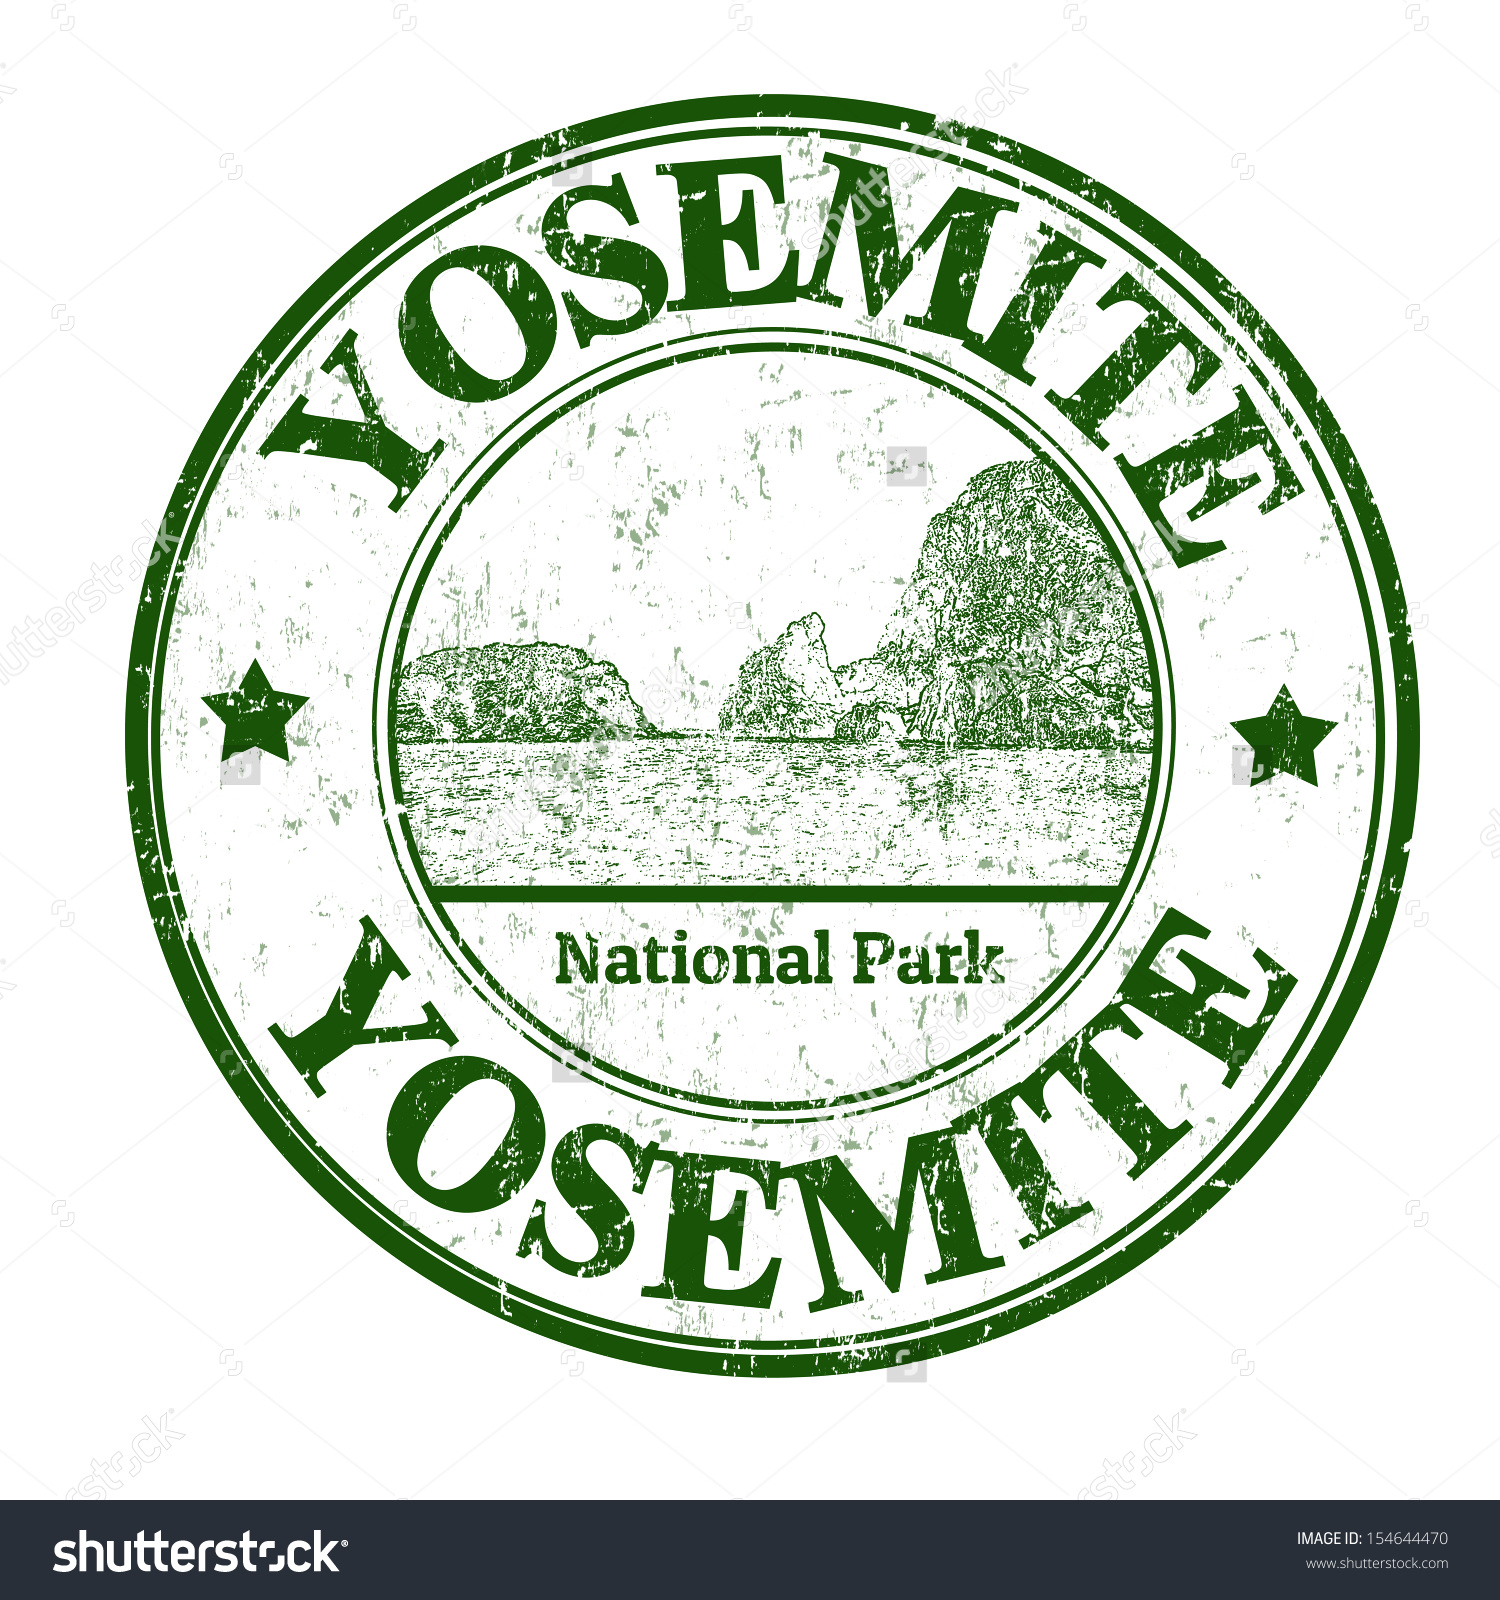 Yosemite National Park clipart #4, Download drawings